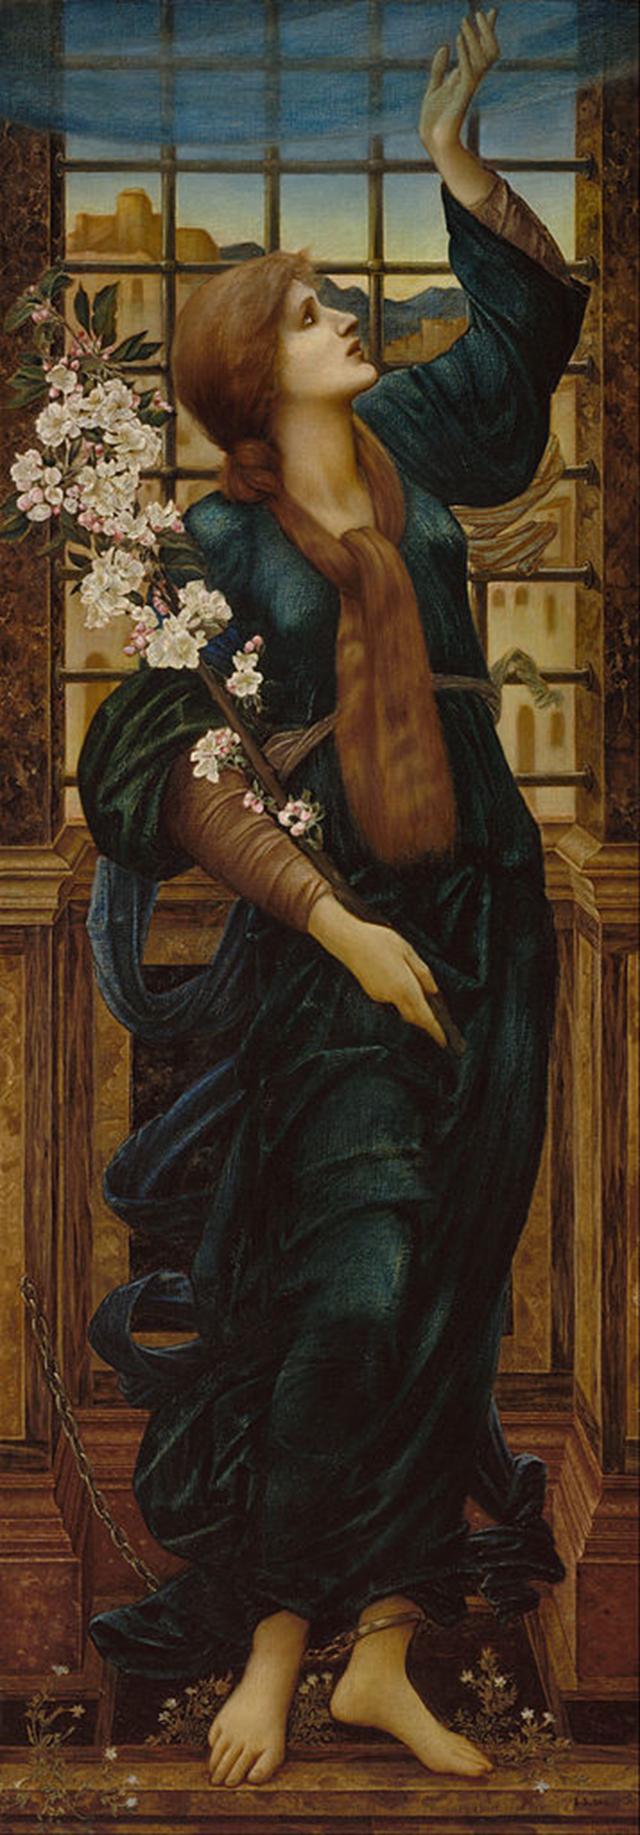 https://upload.wikimedia.org/wikipedia/commons/thumb/9/98/Sir_Edward_Coley_Burne-Jones_-_Hope_-_Google_Art_Project.jpg/357px-Sir_Edward_Coley_Burne-Jones_-_Hope_-_Google_Art_Project.jpg